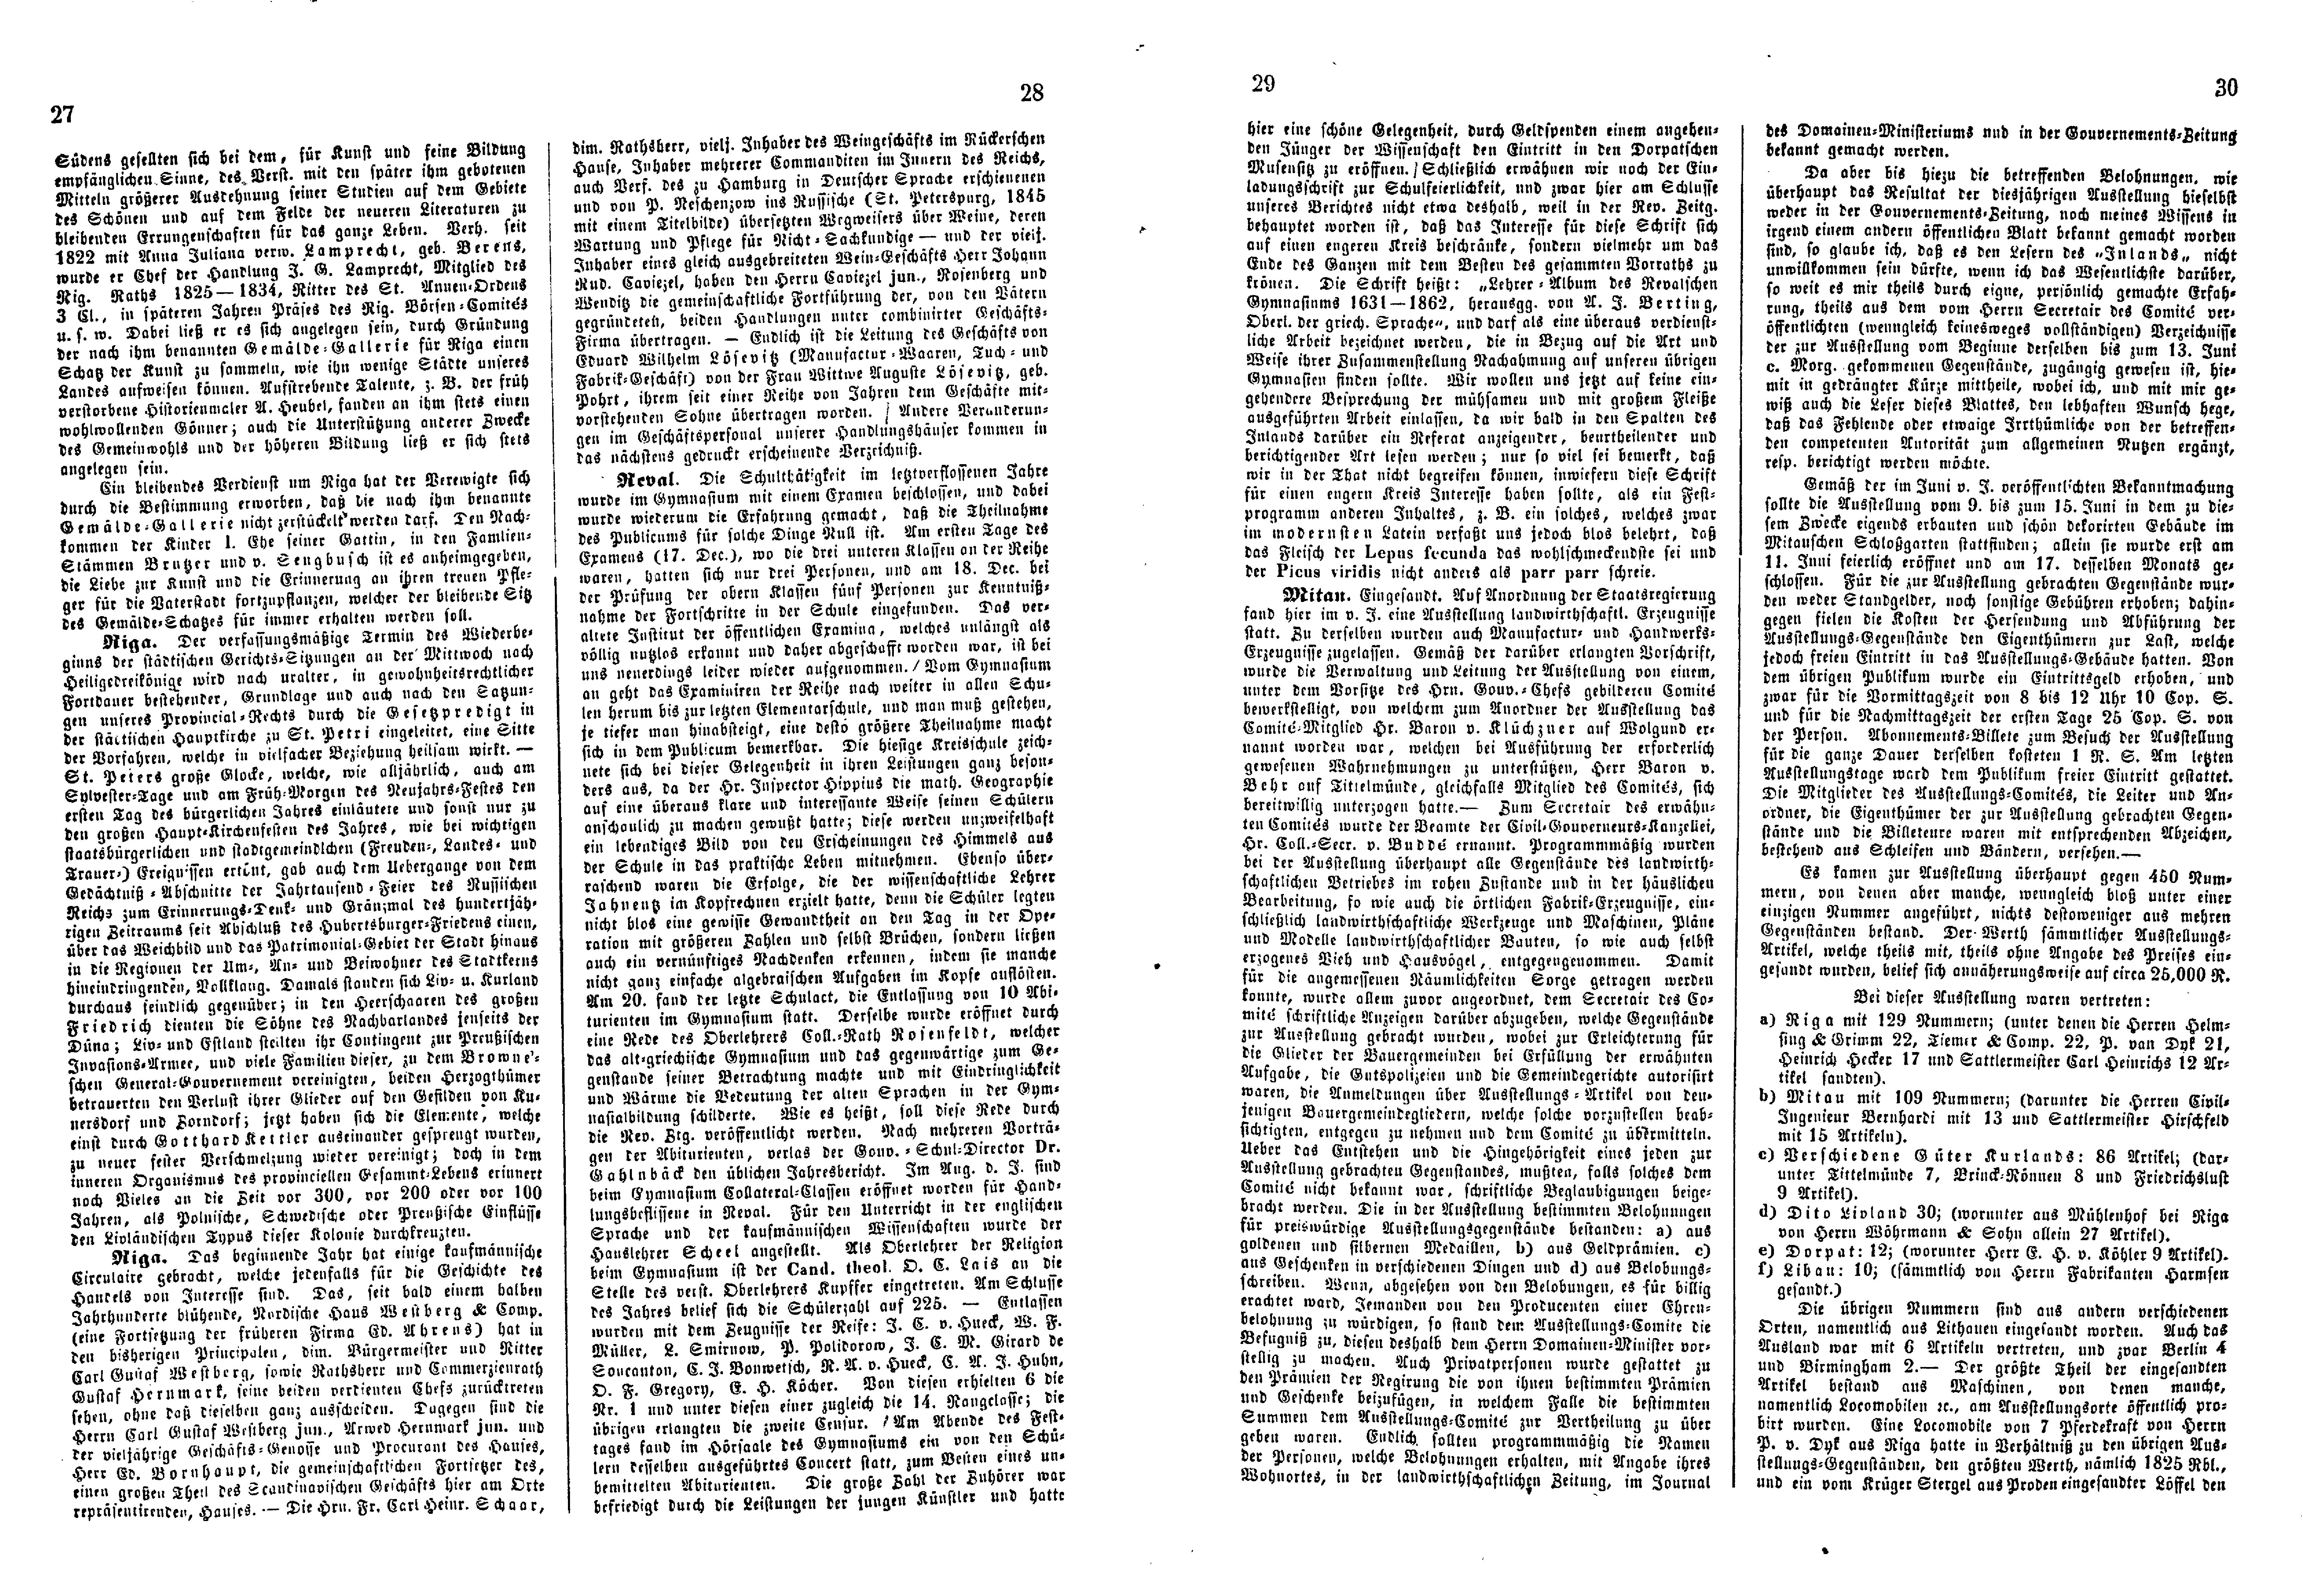 Das Inland [28] (1863) | 11. (27-30) Main body of text